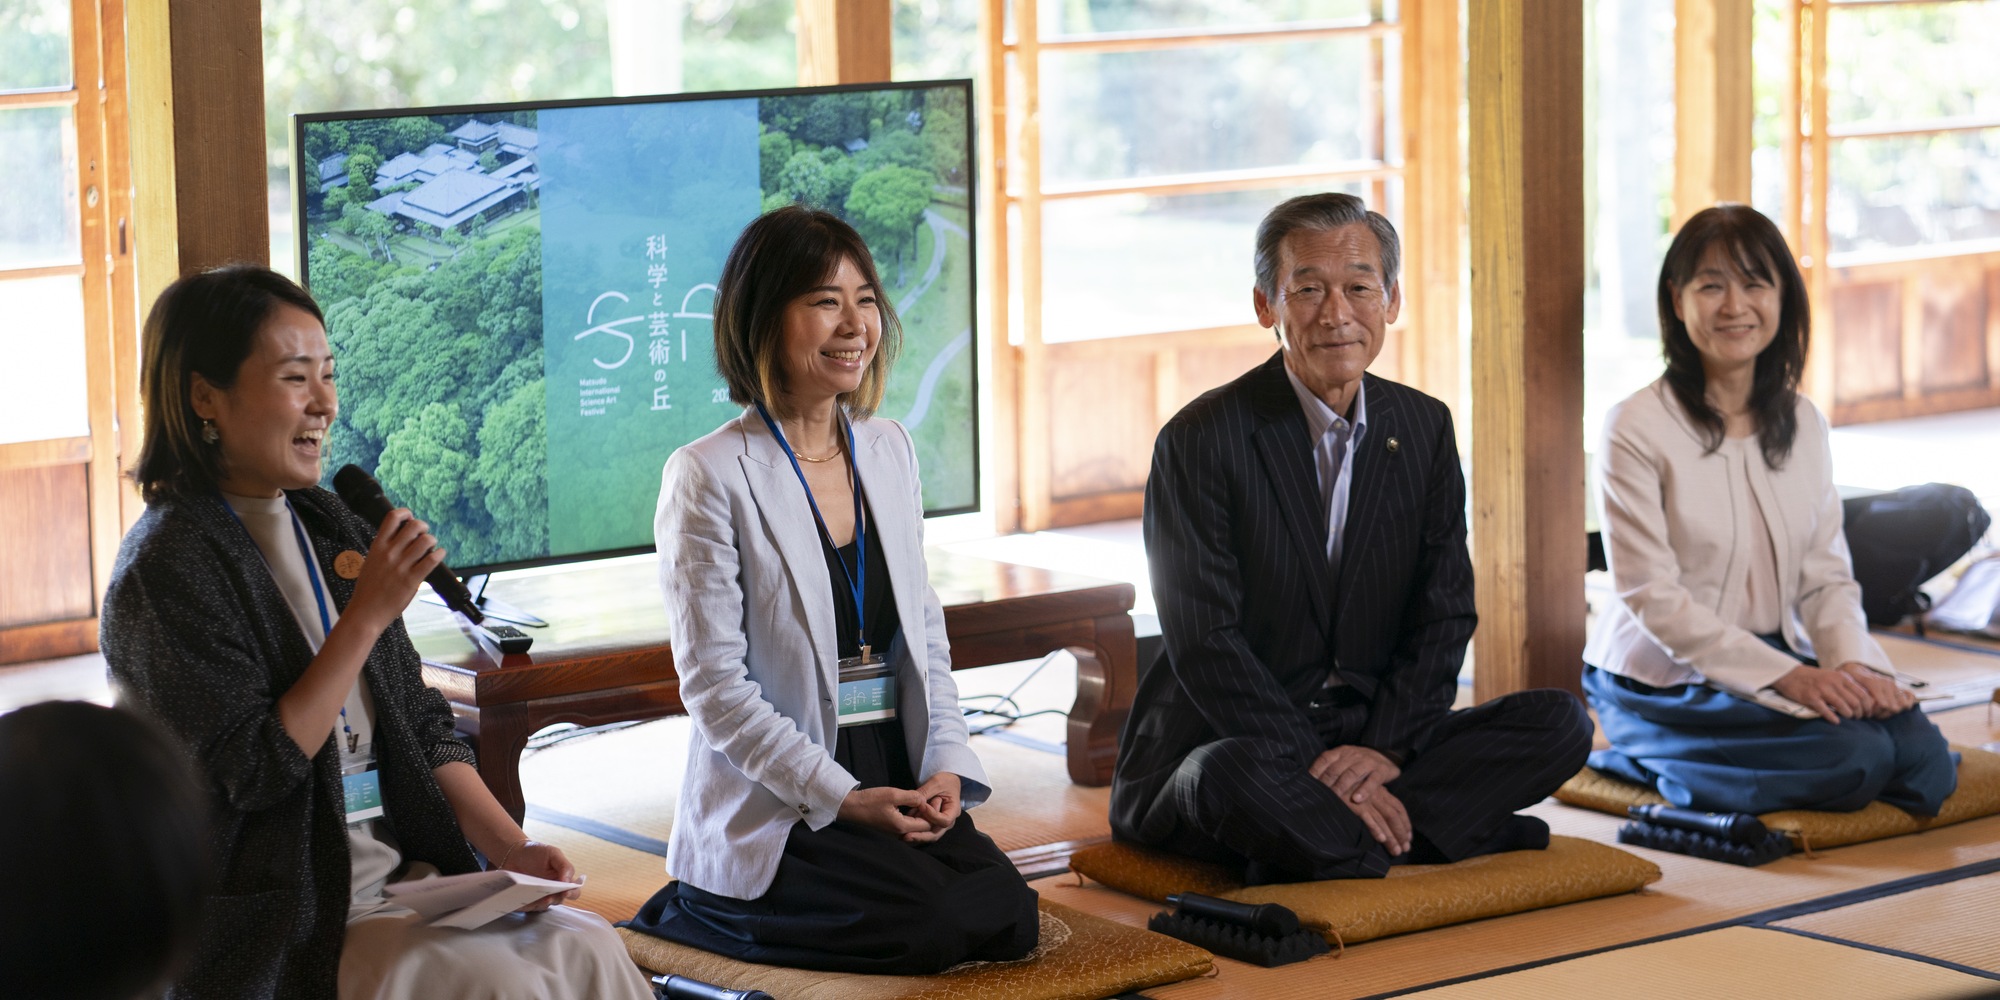 Yoko Shimizu gives an Opening Talk with the Mayor of Matsudo City